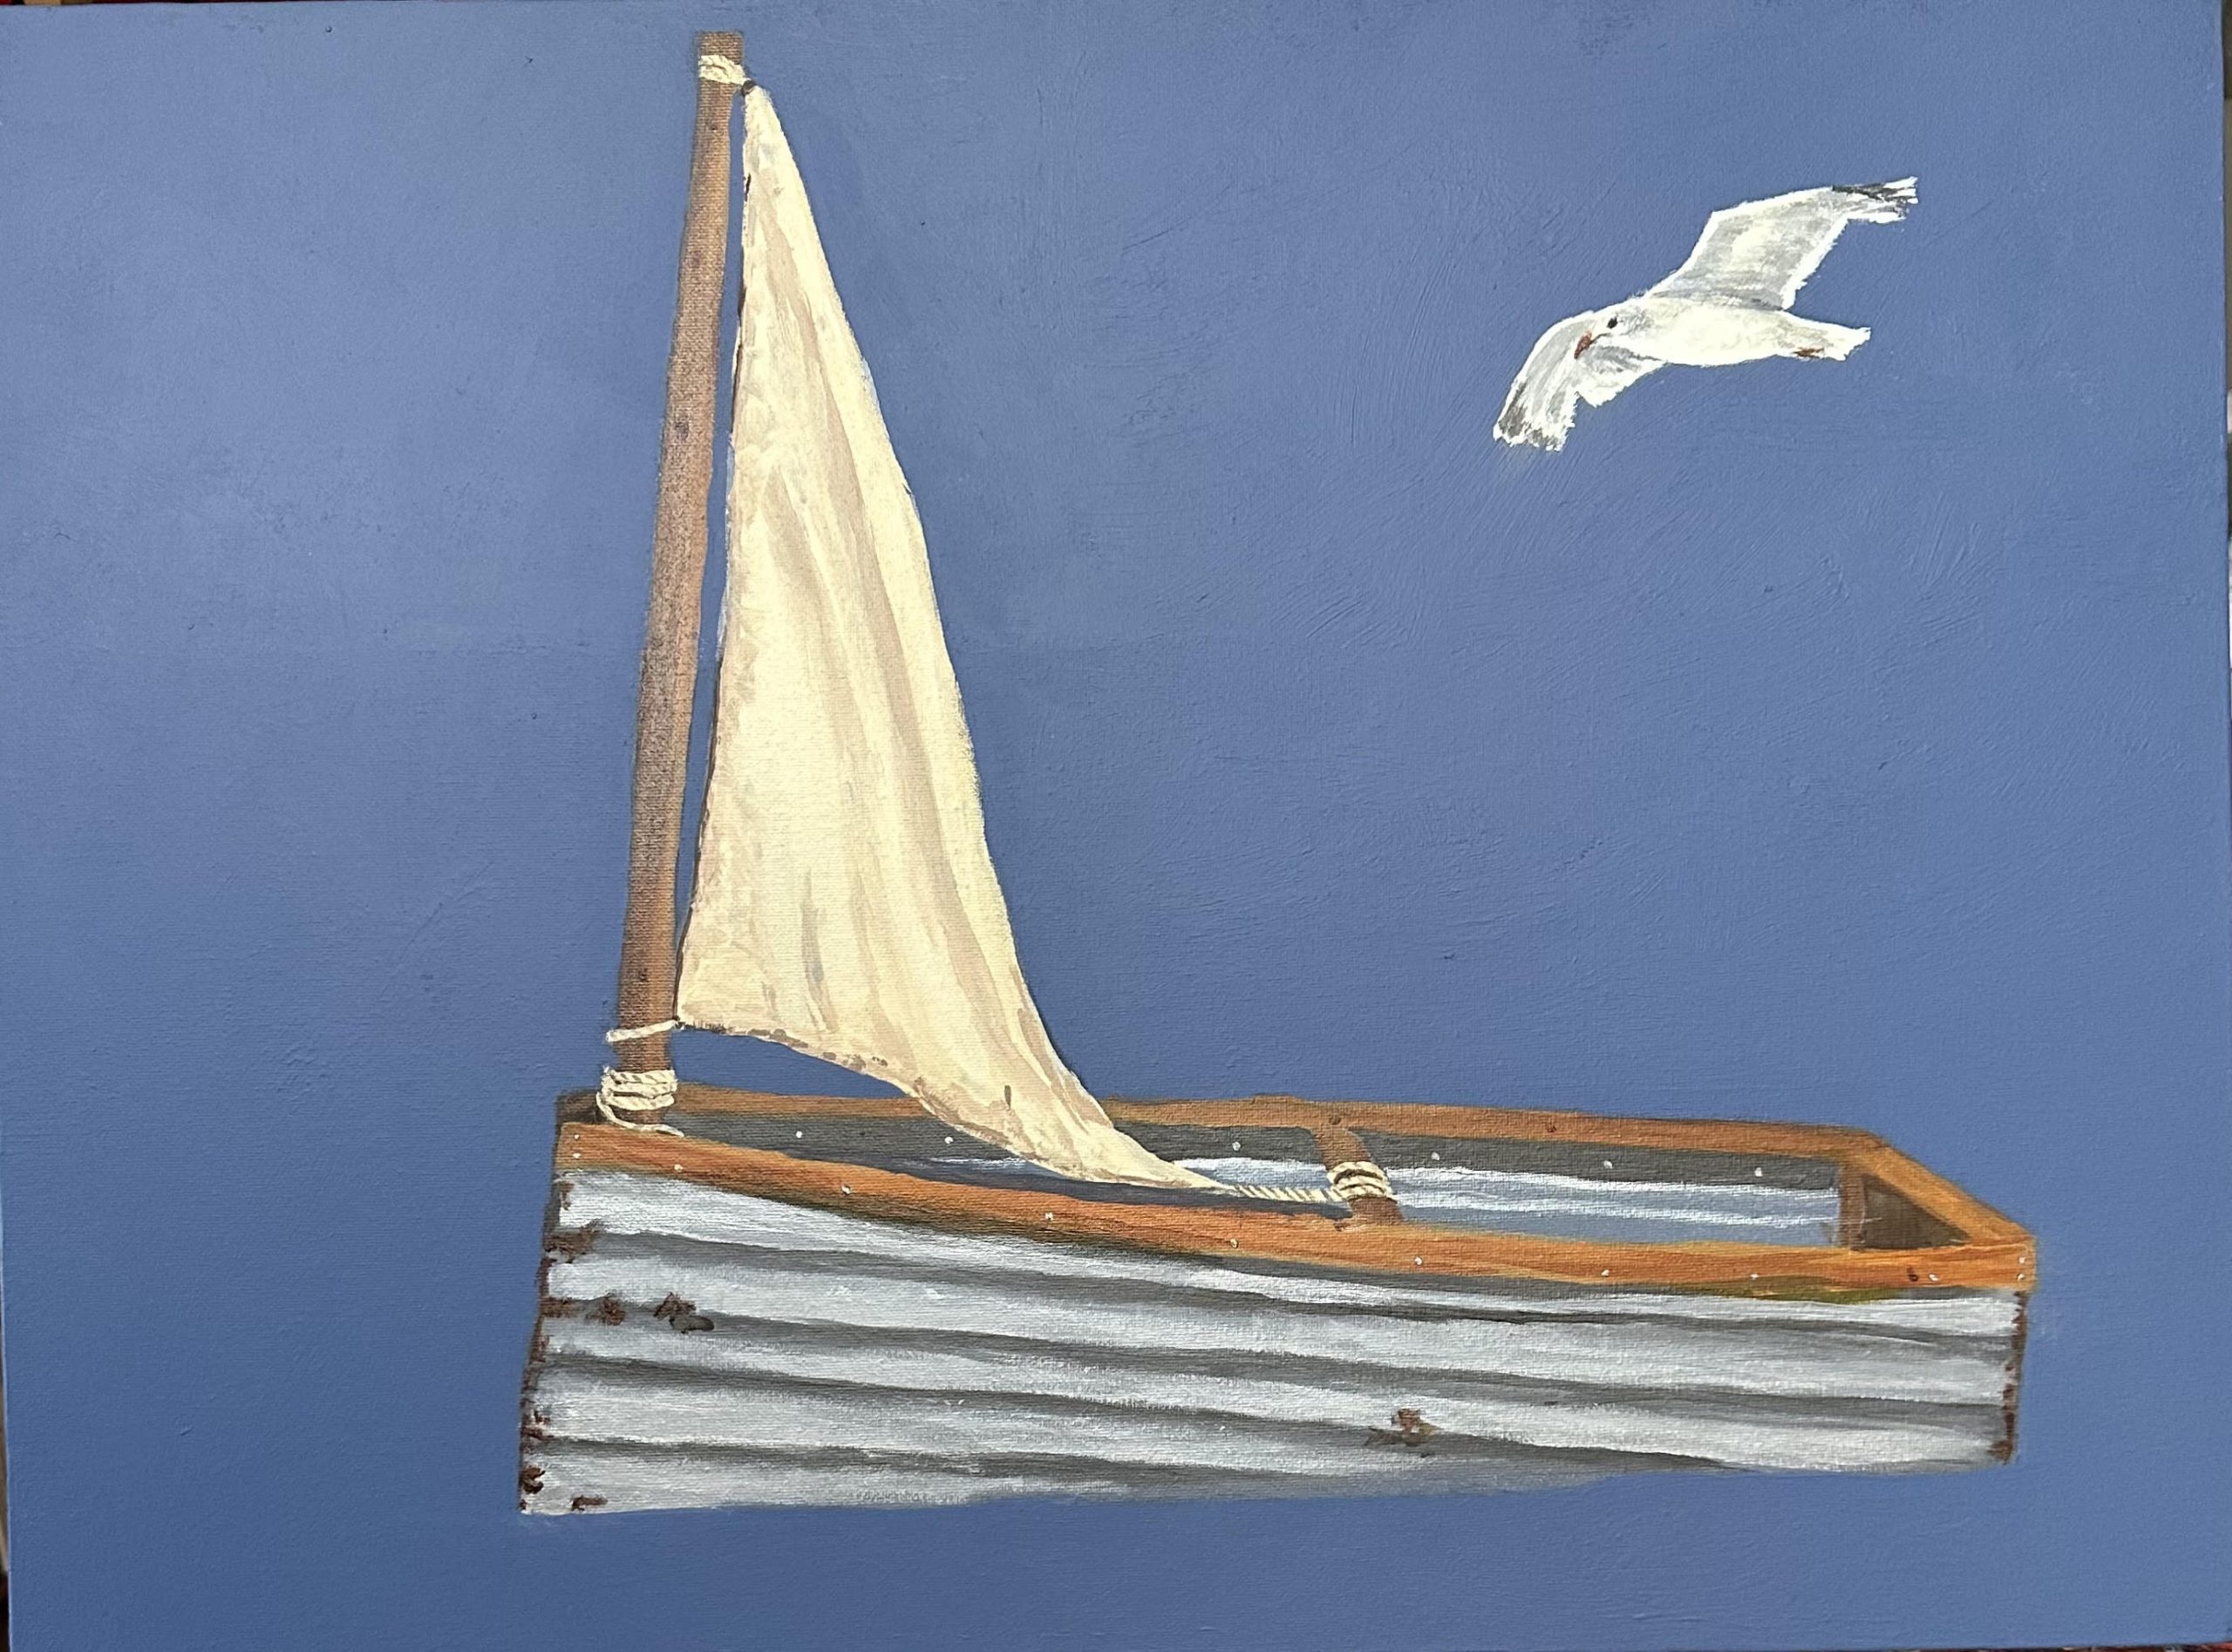 Dream Boat painting by Dorte Colja